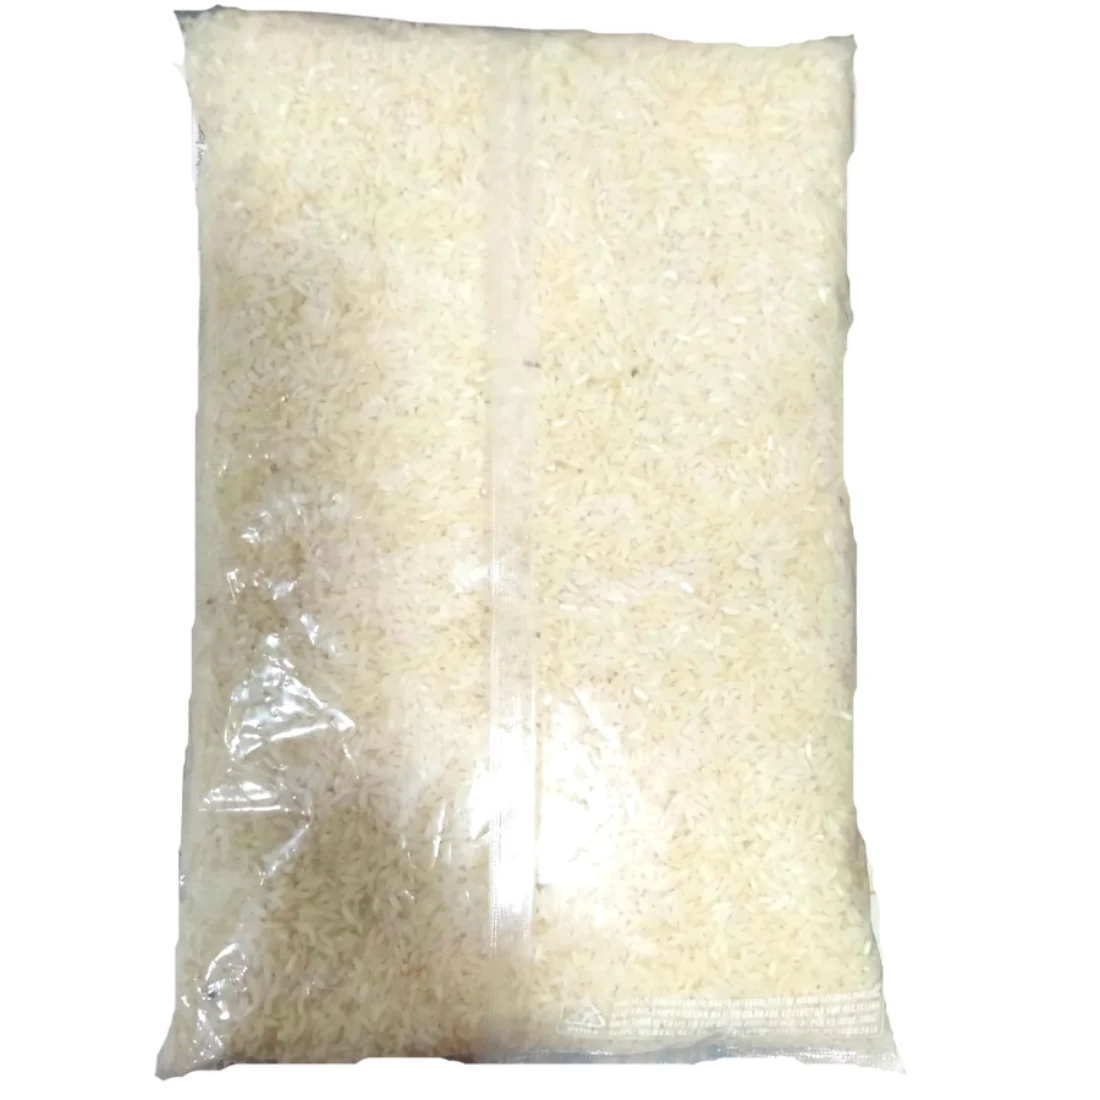 Tulaipanji Rice 1 kg pouch